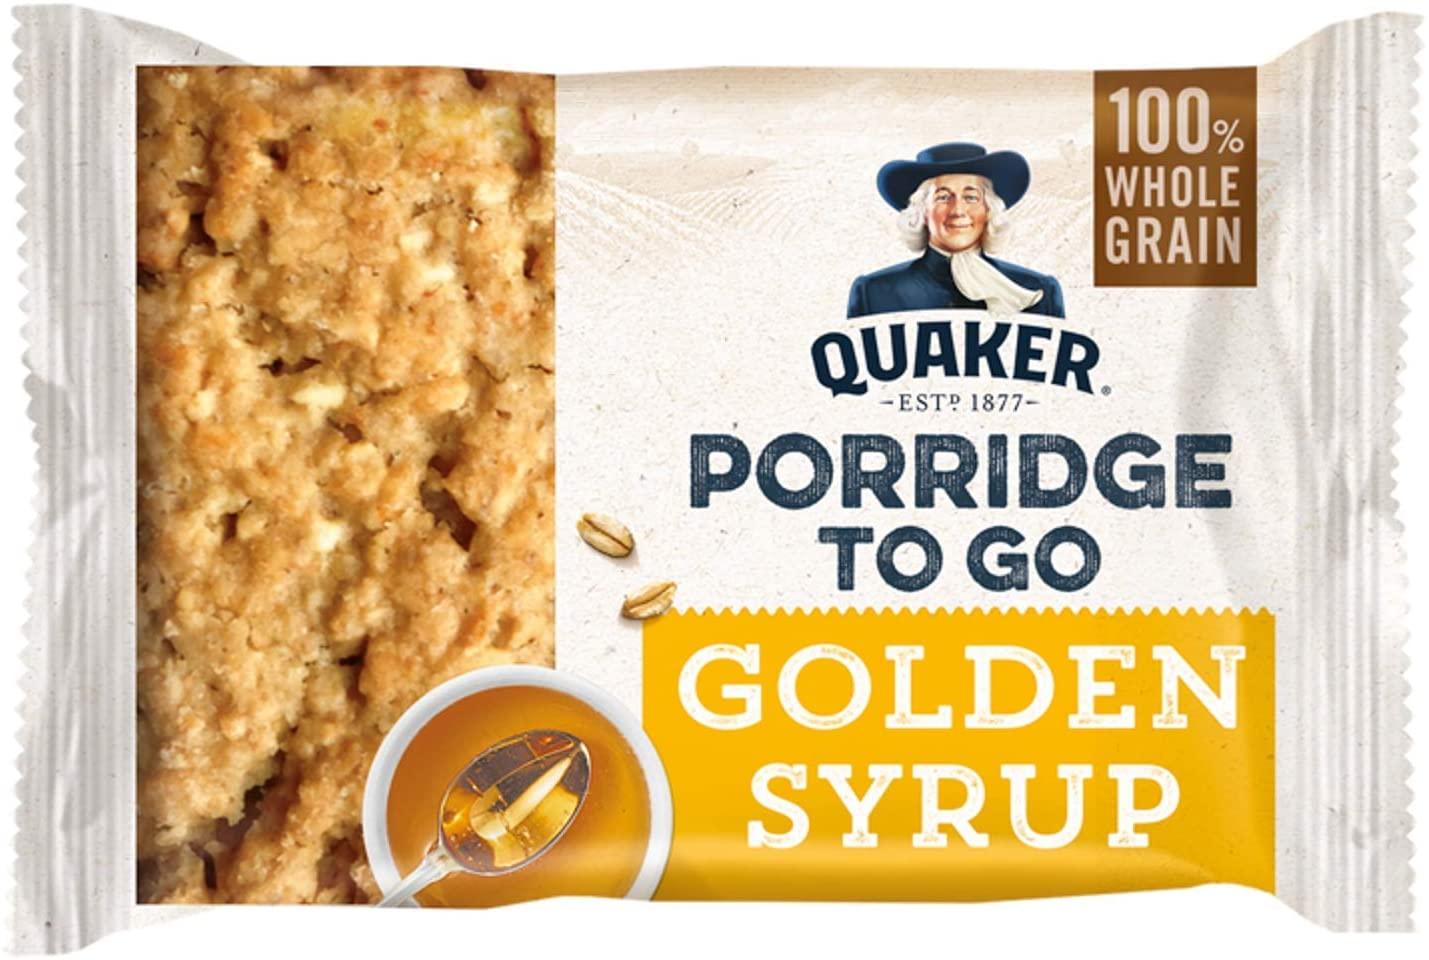 Quaker Oats Porridge To Go Golden Syrup Square 55g - Pack of 12 - Vending Superstore